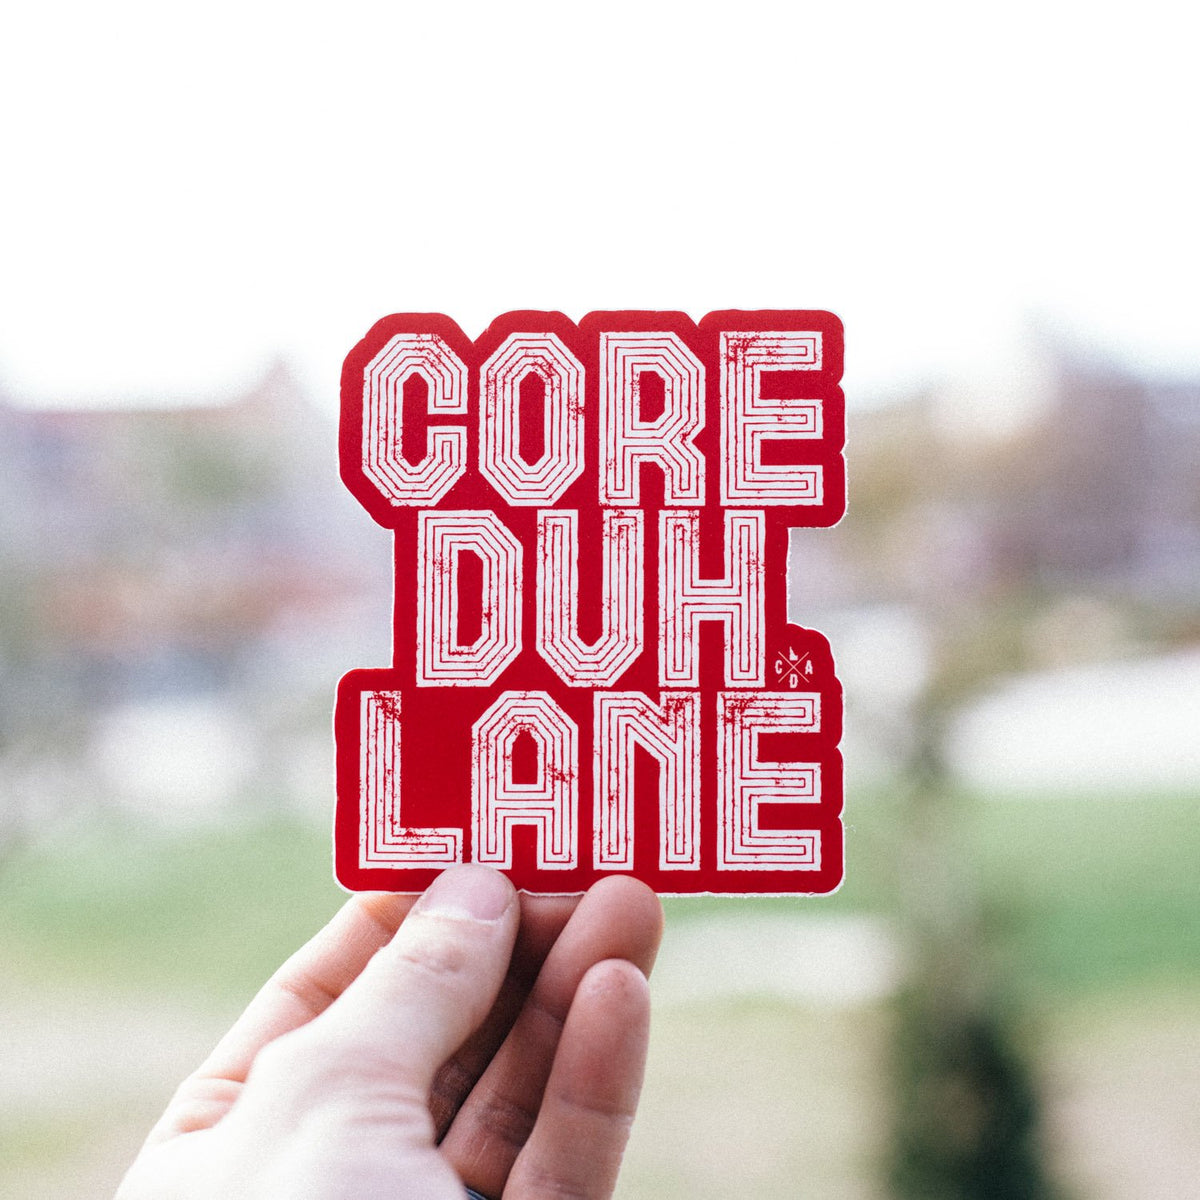 Core Duh Lane Grunge Sticker